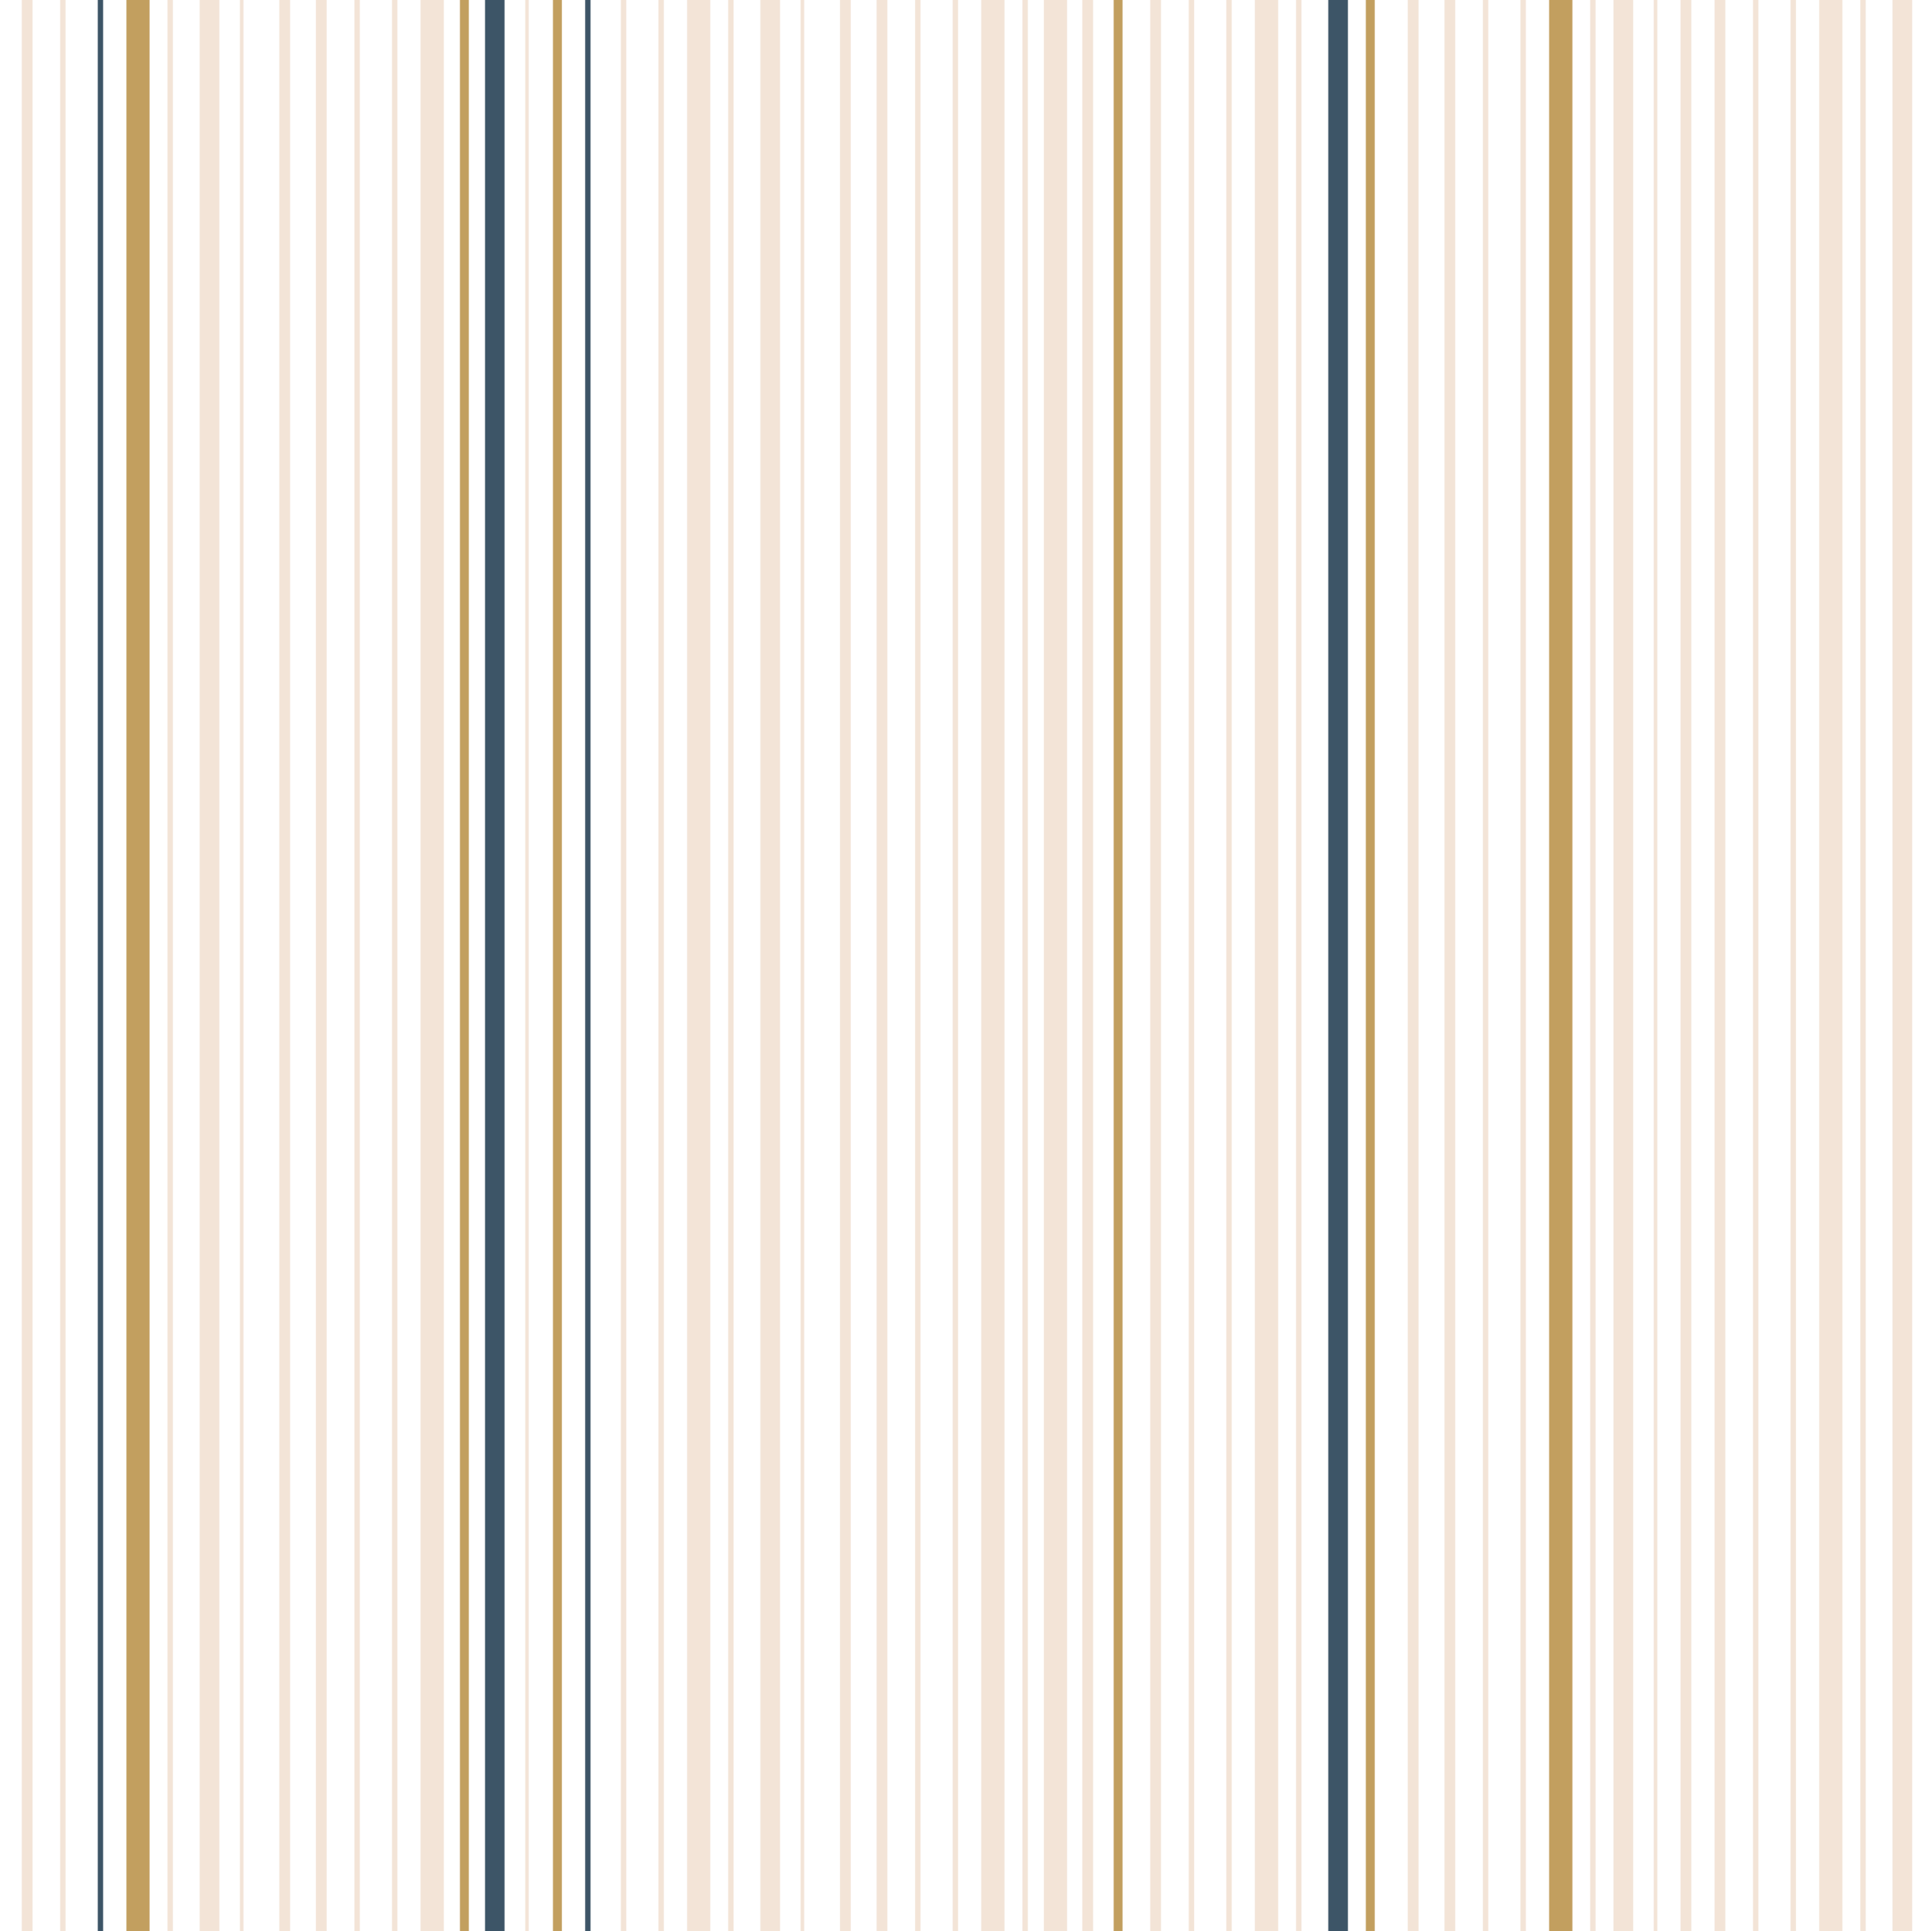 stripes-03.png